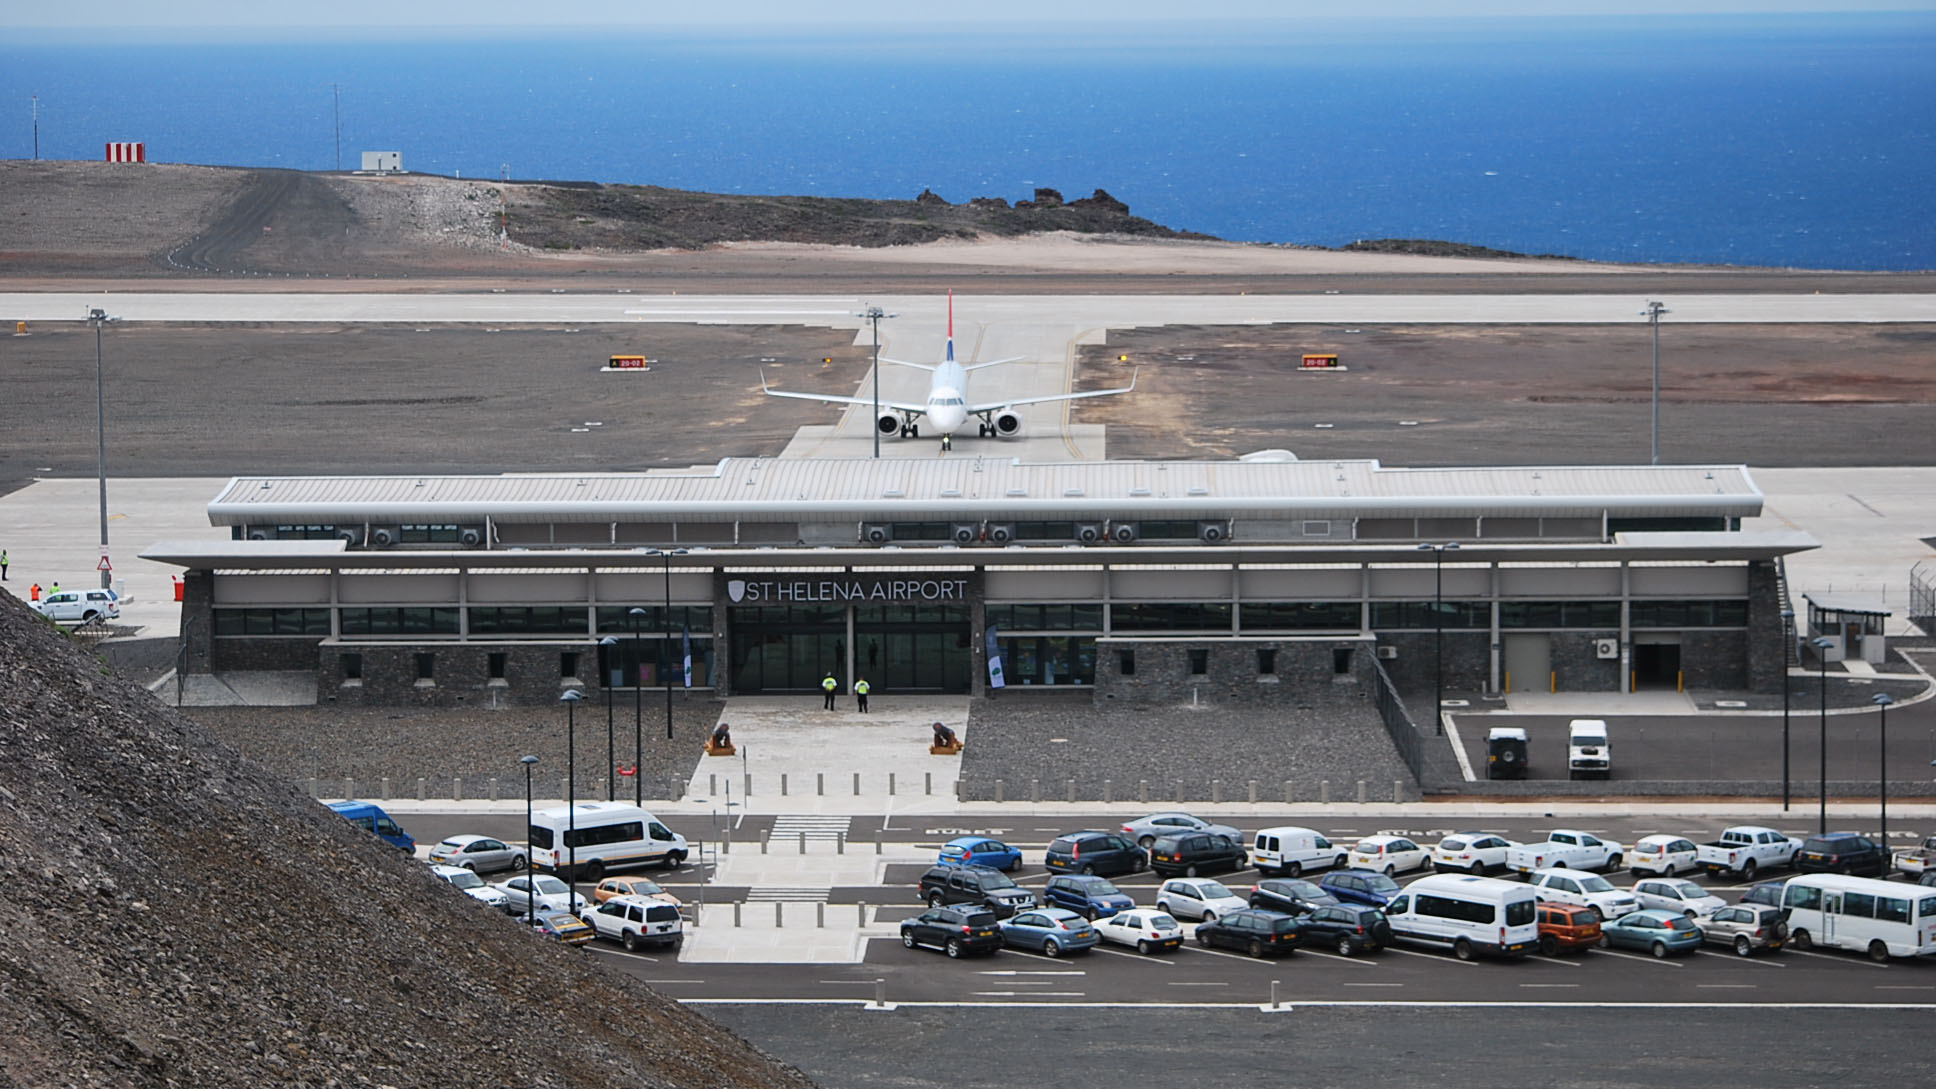 Saint Helena Airport - arrivals, departures and code